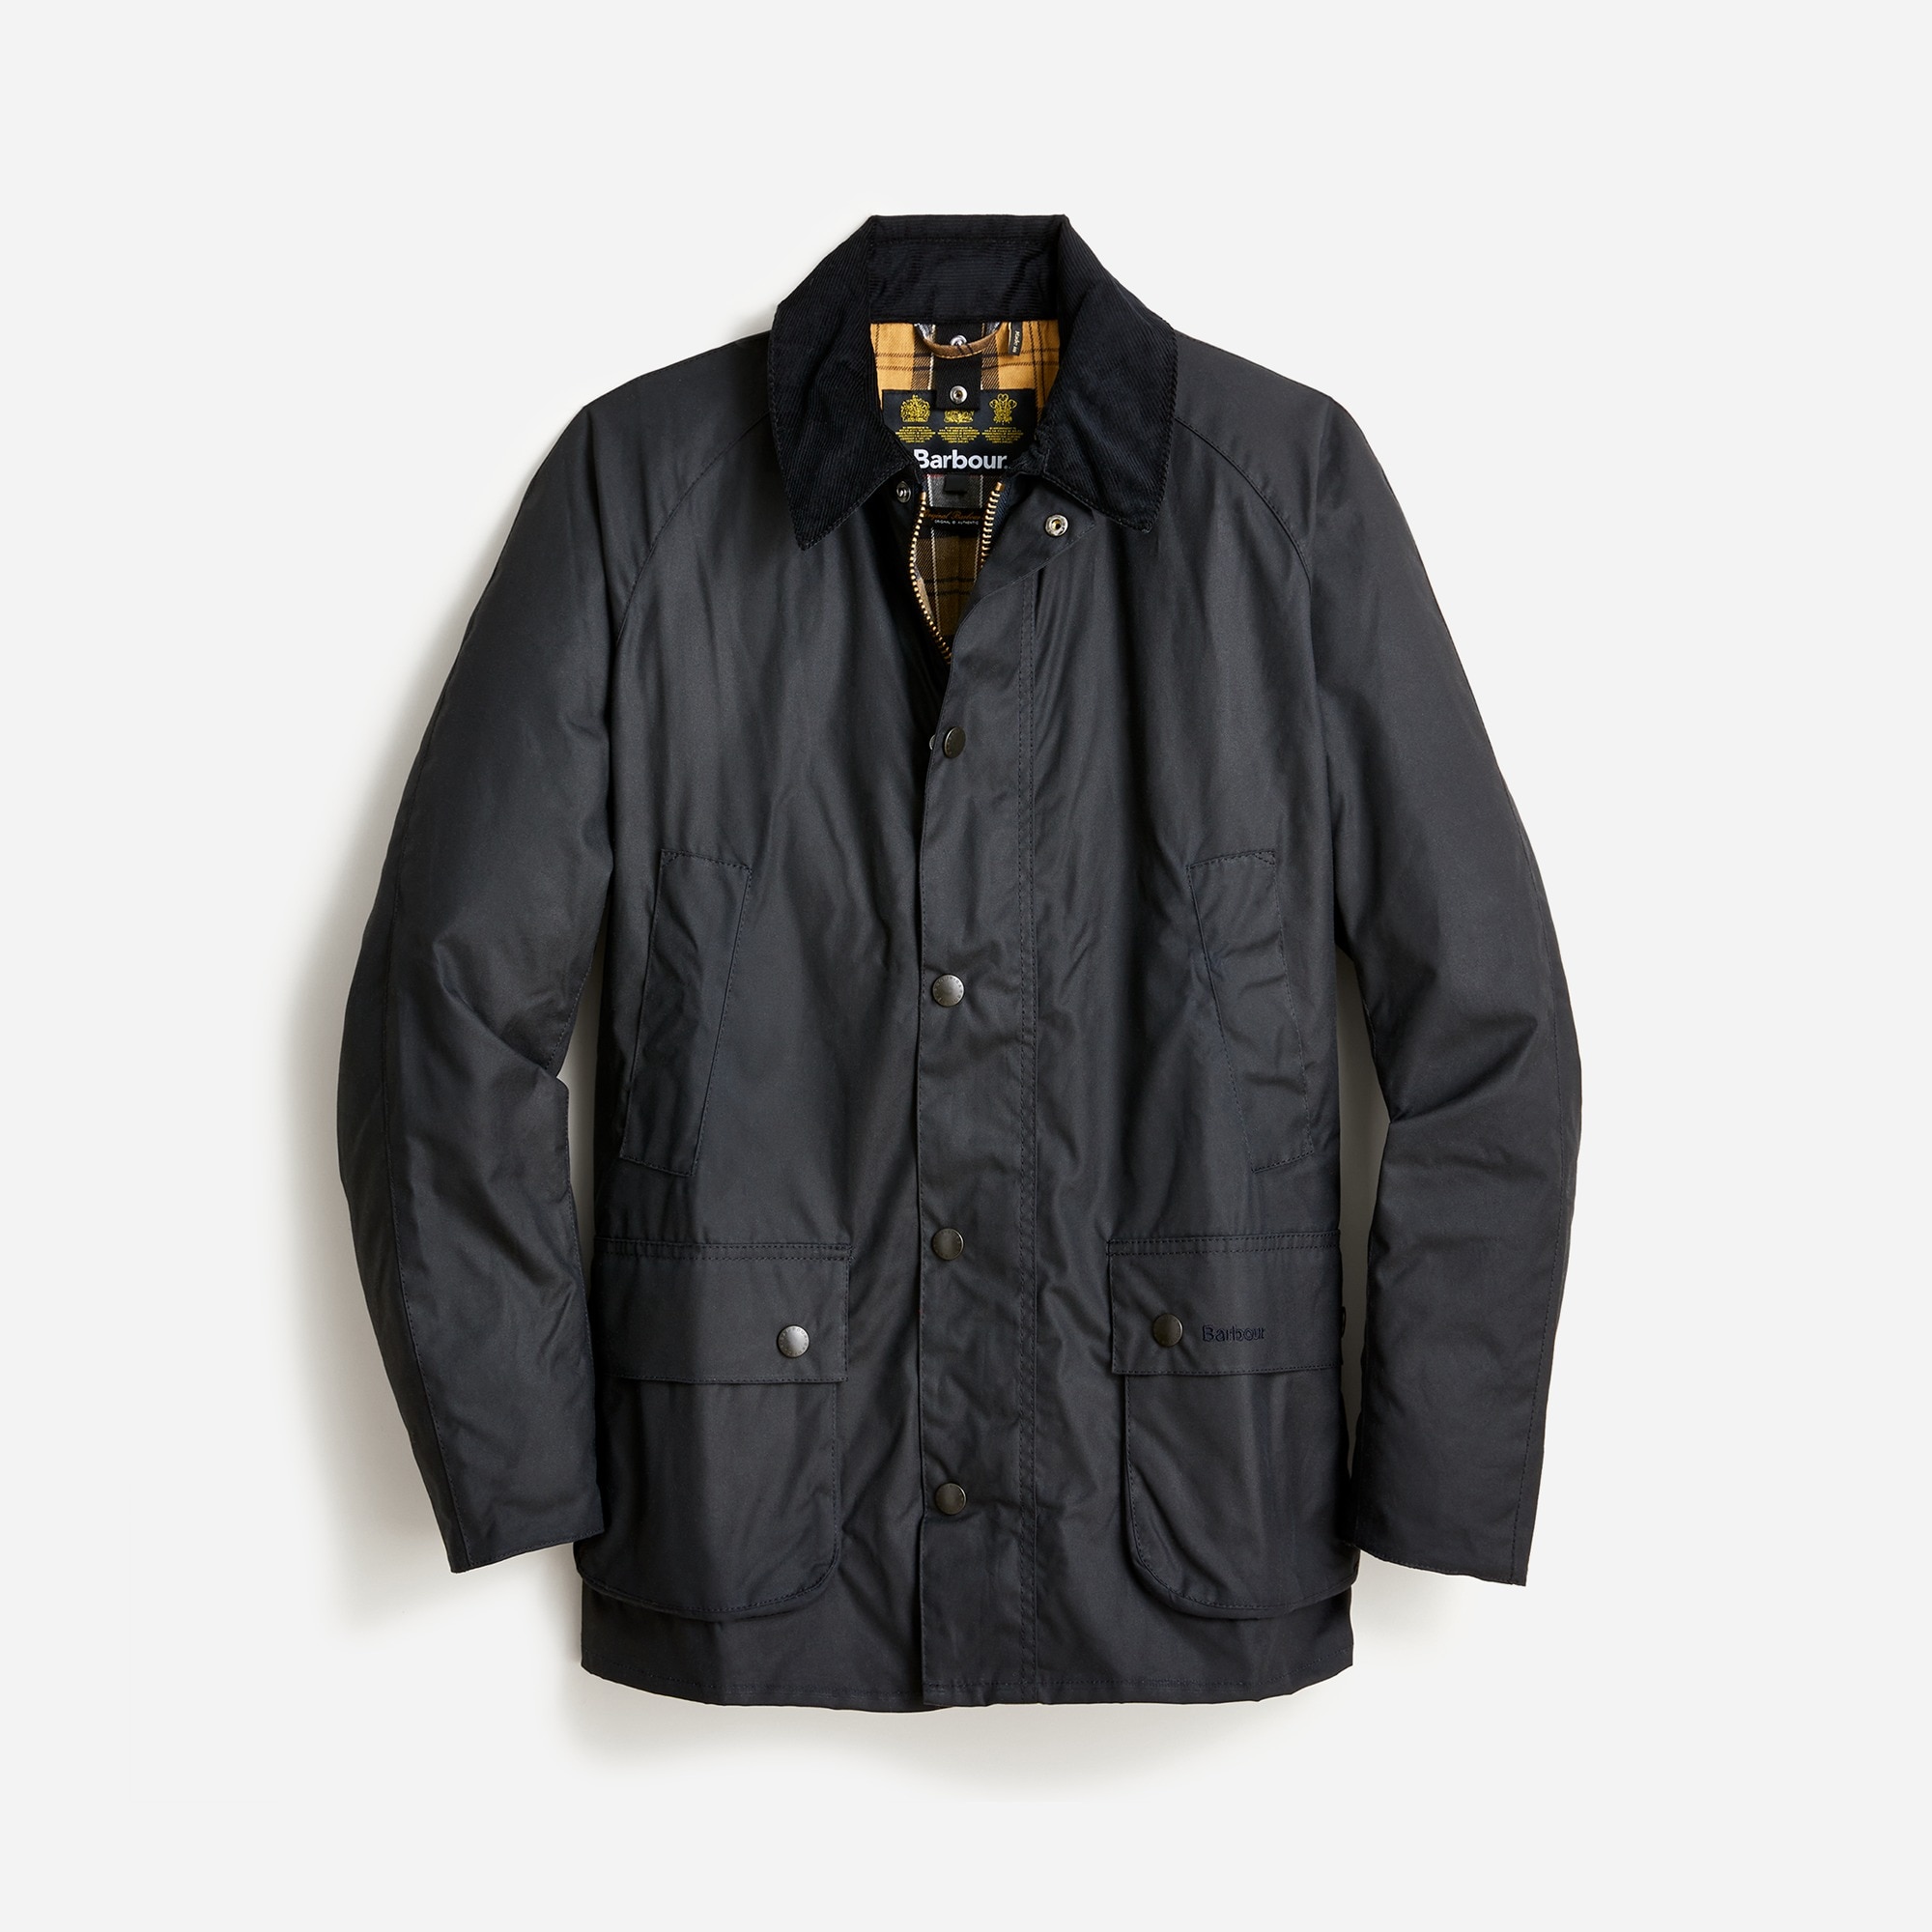 Barbour Sylkoil Ashby Jacket : Men's Coats & Jackets | J.Crew